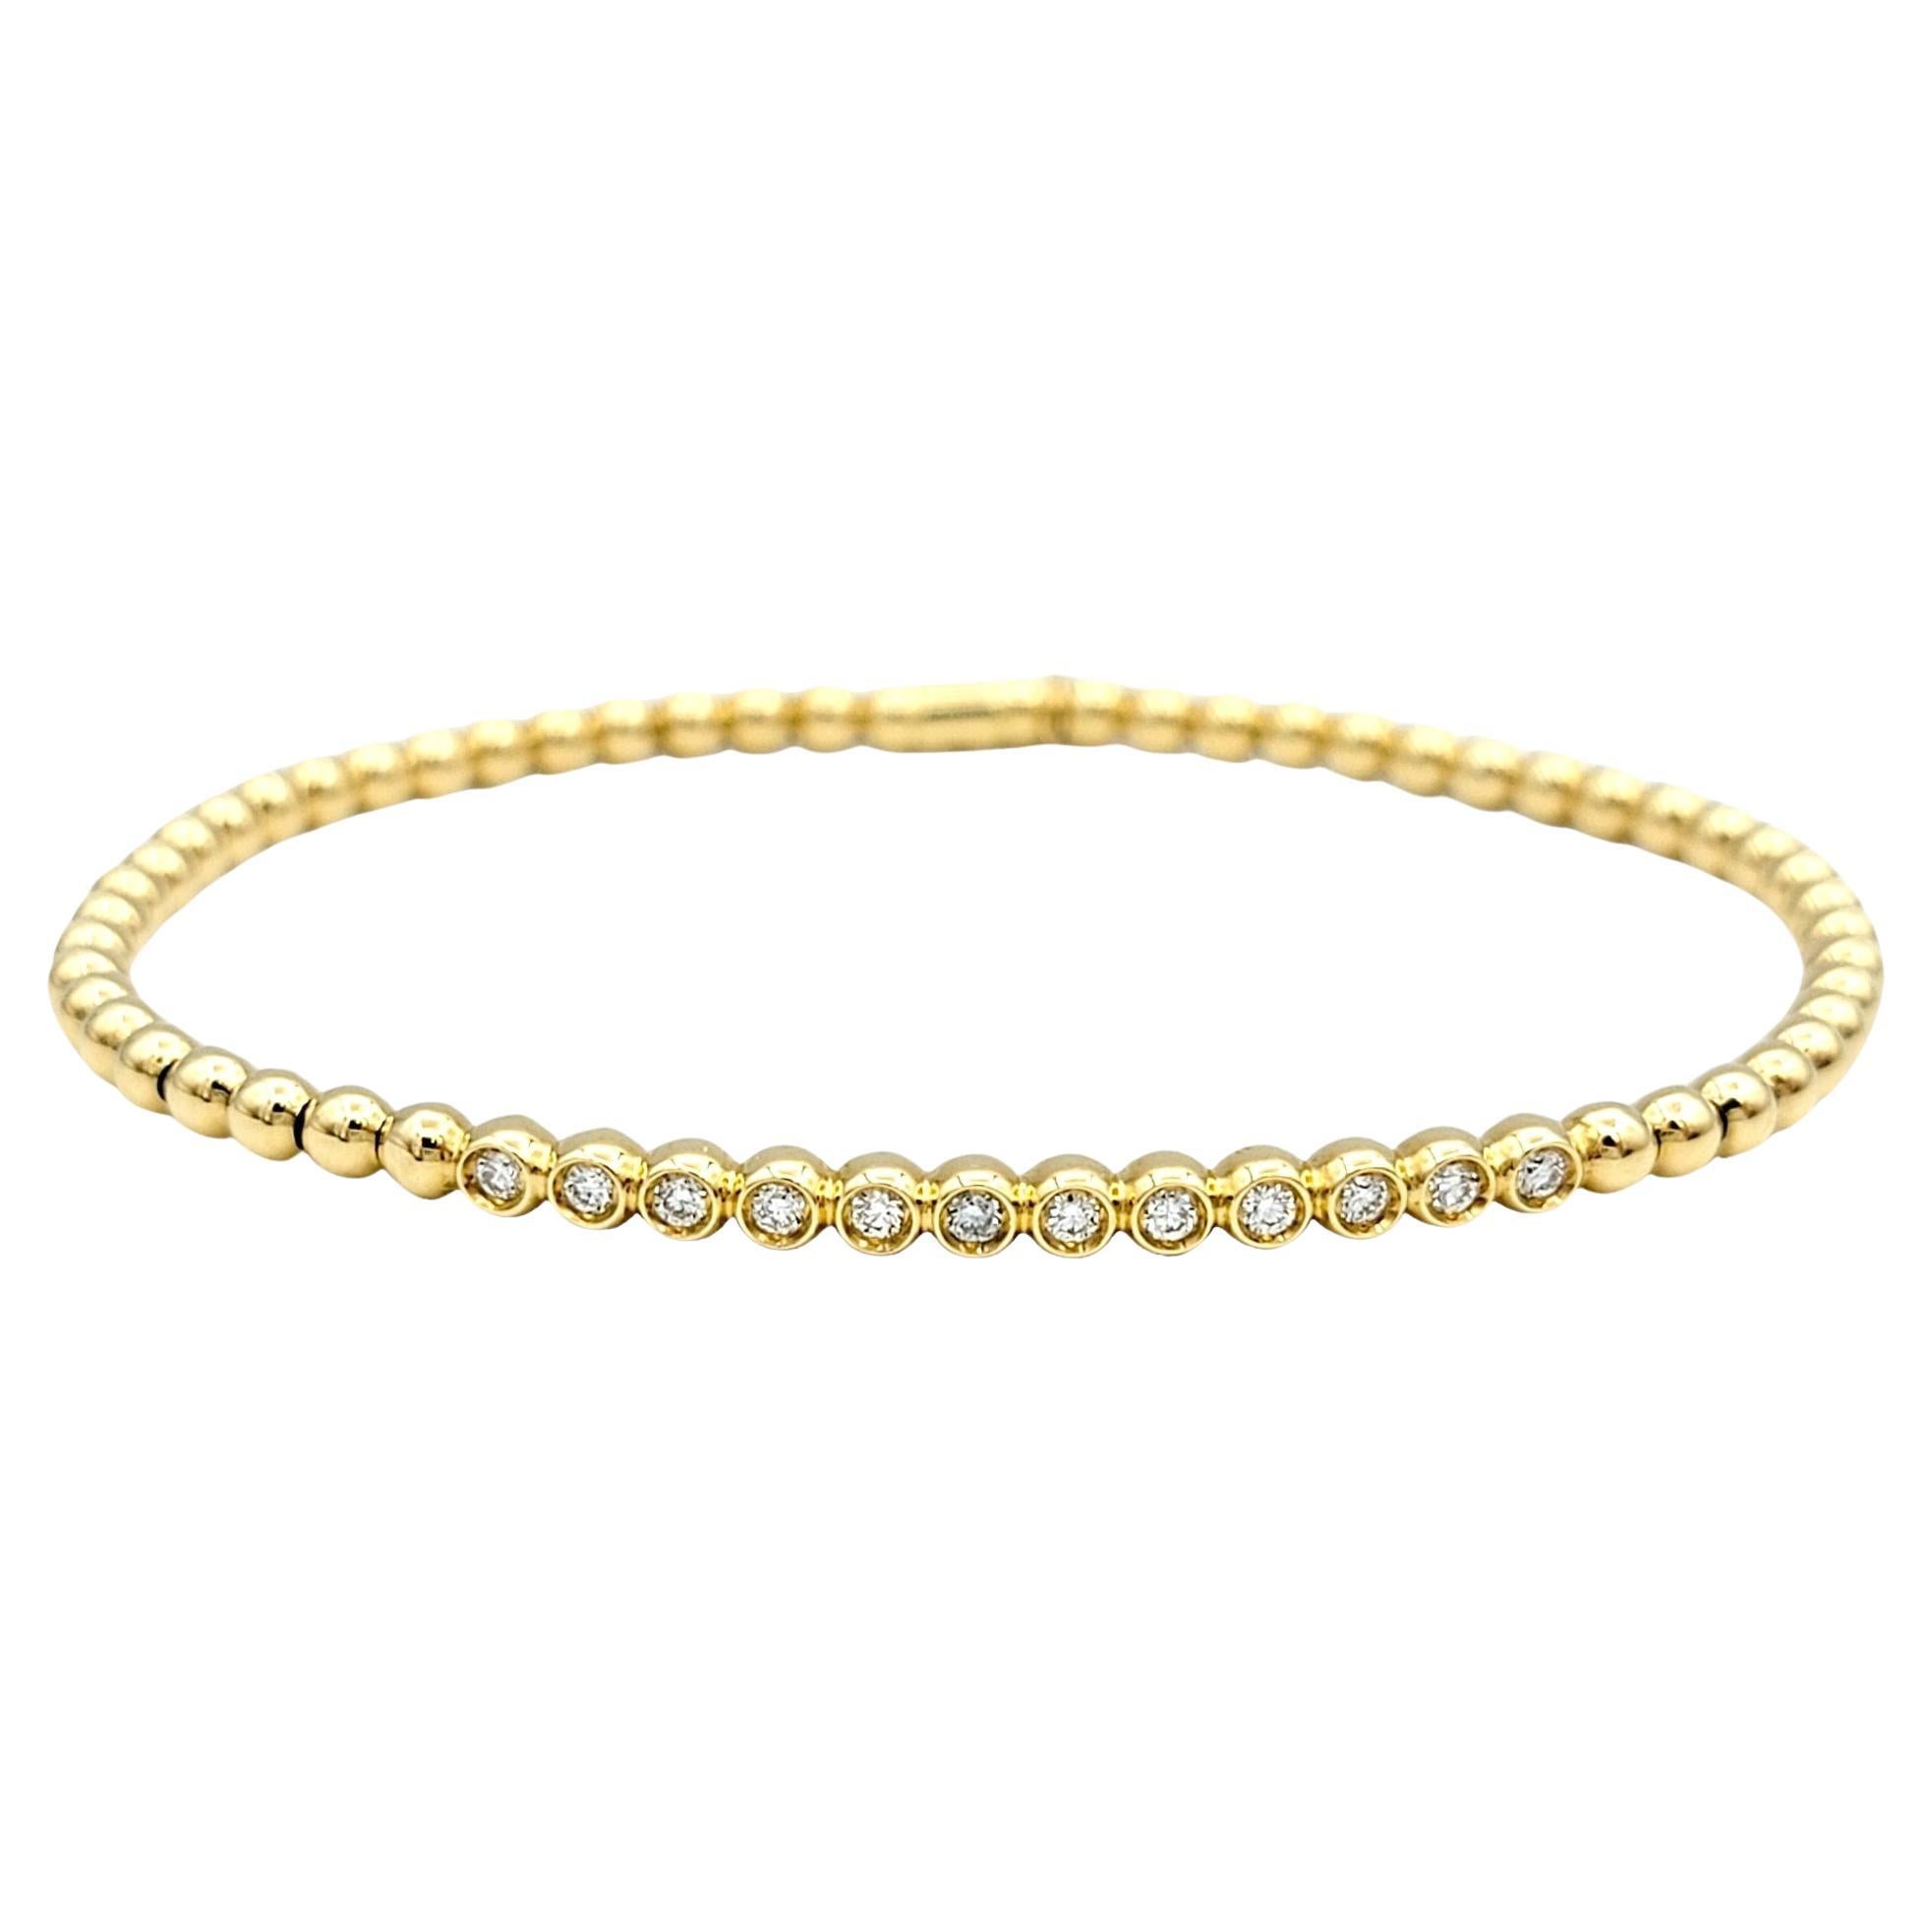 Hulchi Belluni Tresore Collection 3mm Stretch Bracelet Yellow Gold and Diamonds